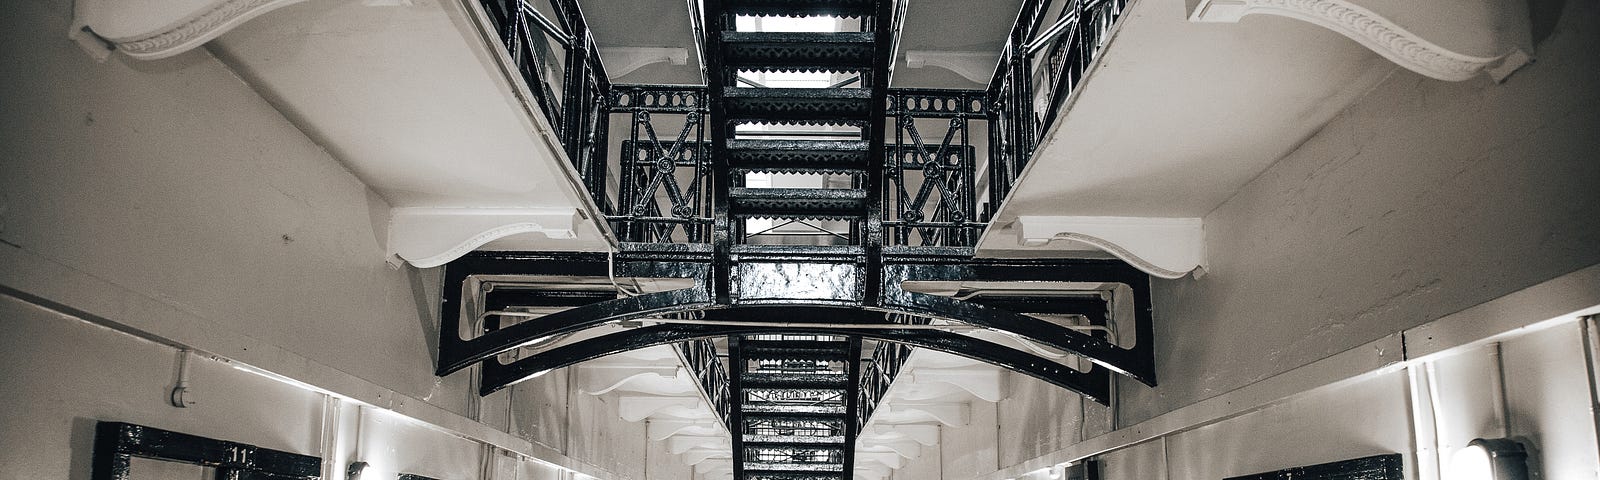 A prison hallway